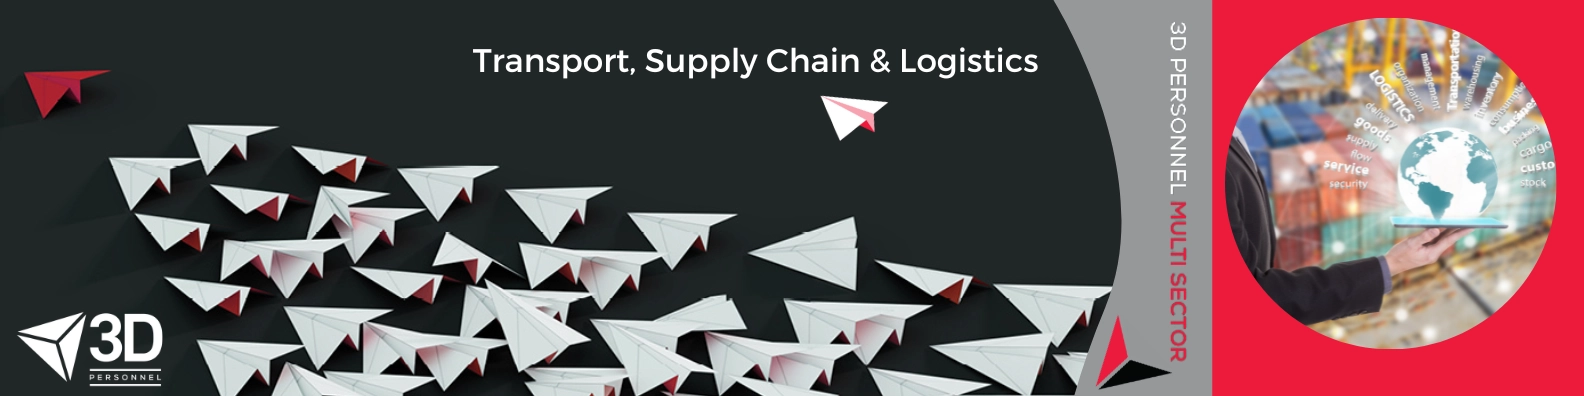 Transport, Supply Chain & Logistics graphic